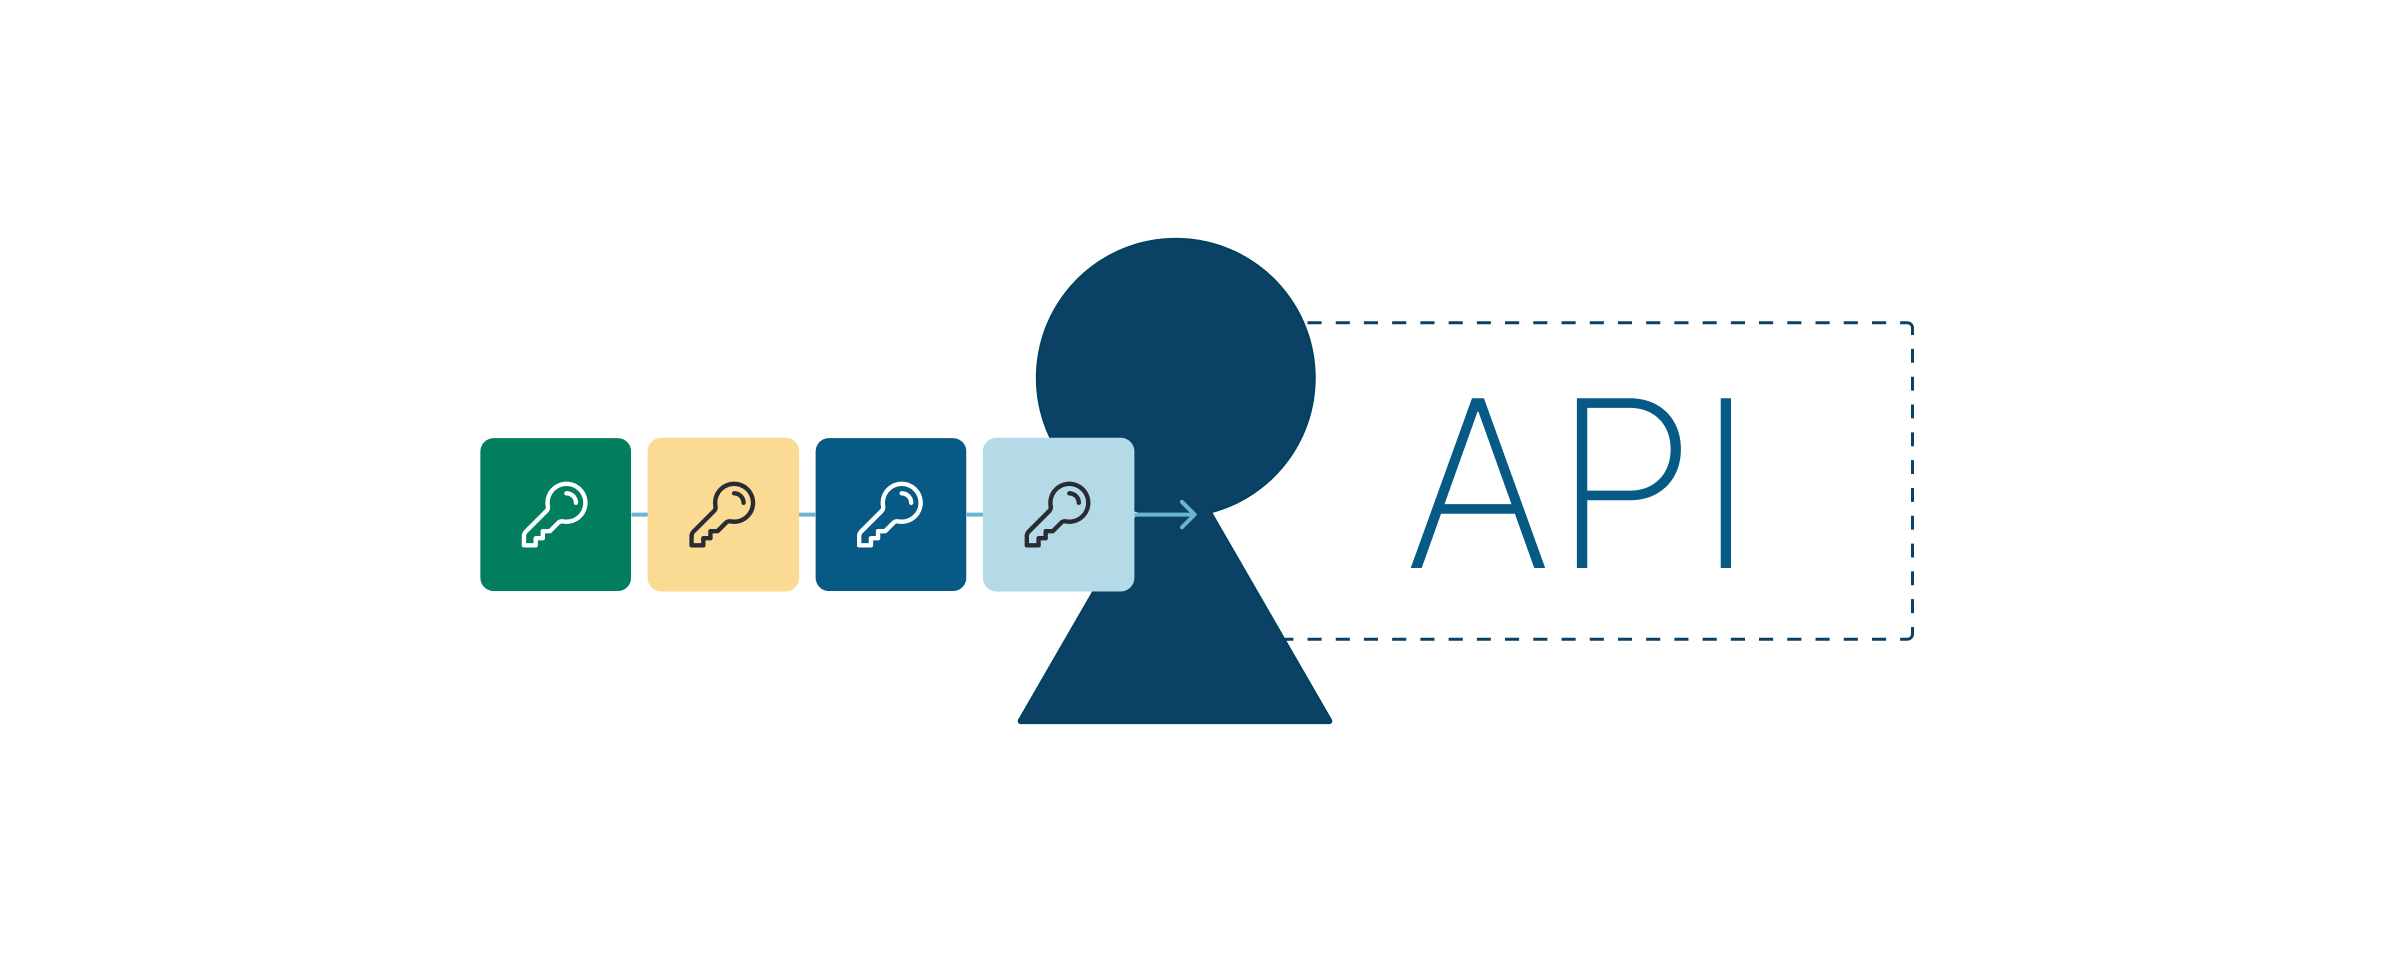 Illustration showing four new API keys for secure authorization